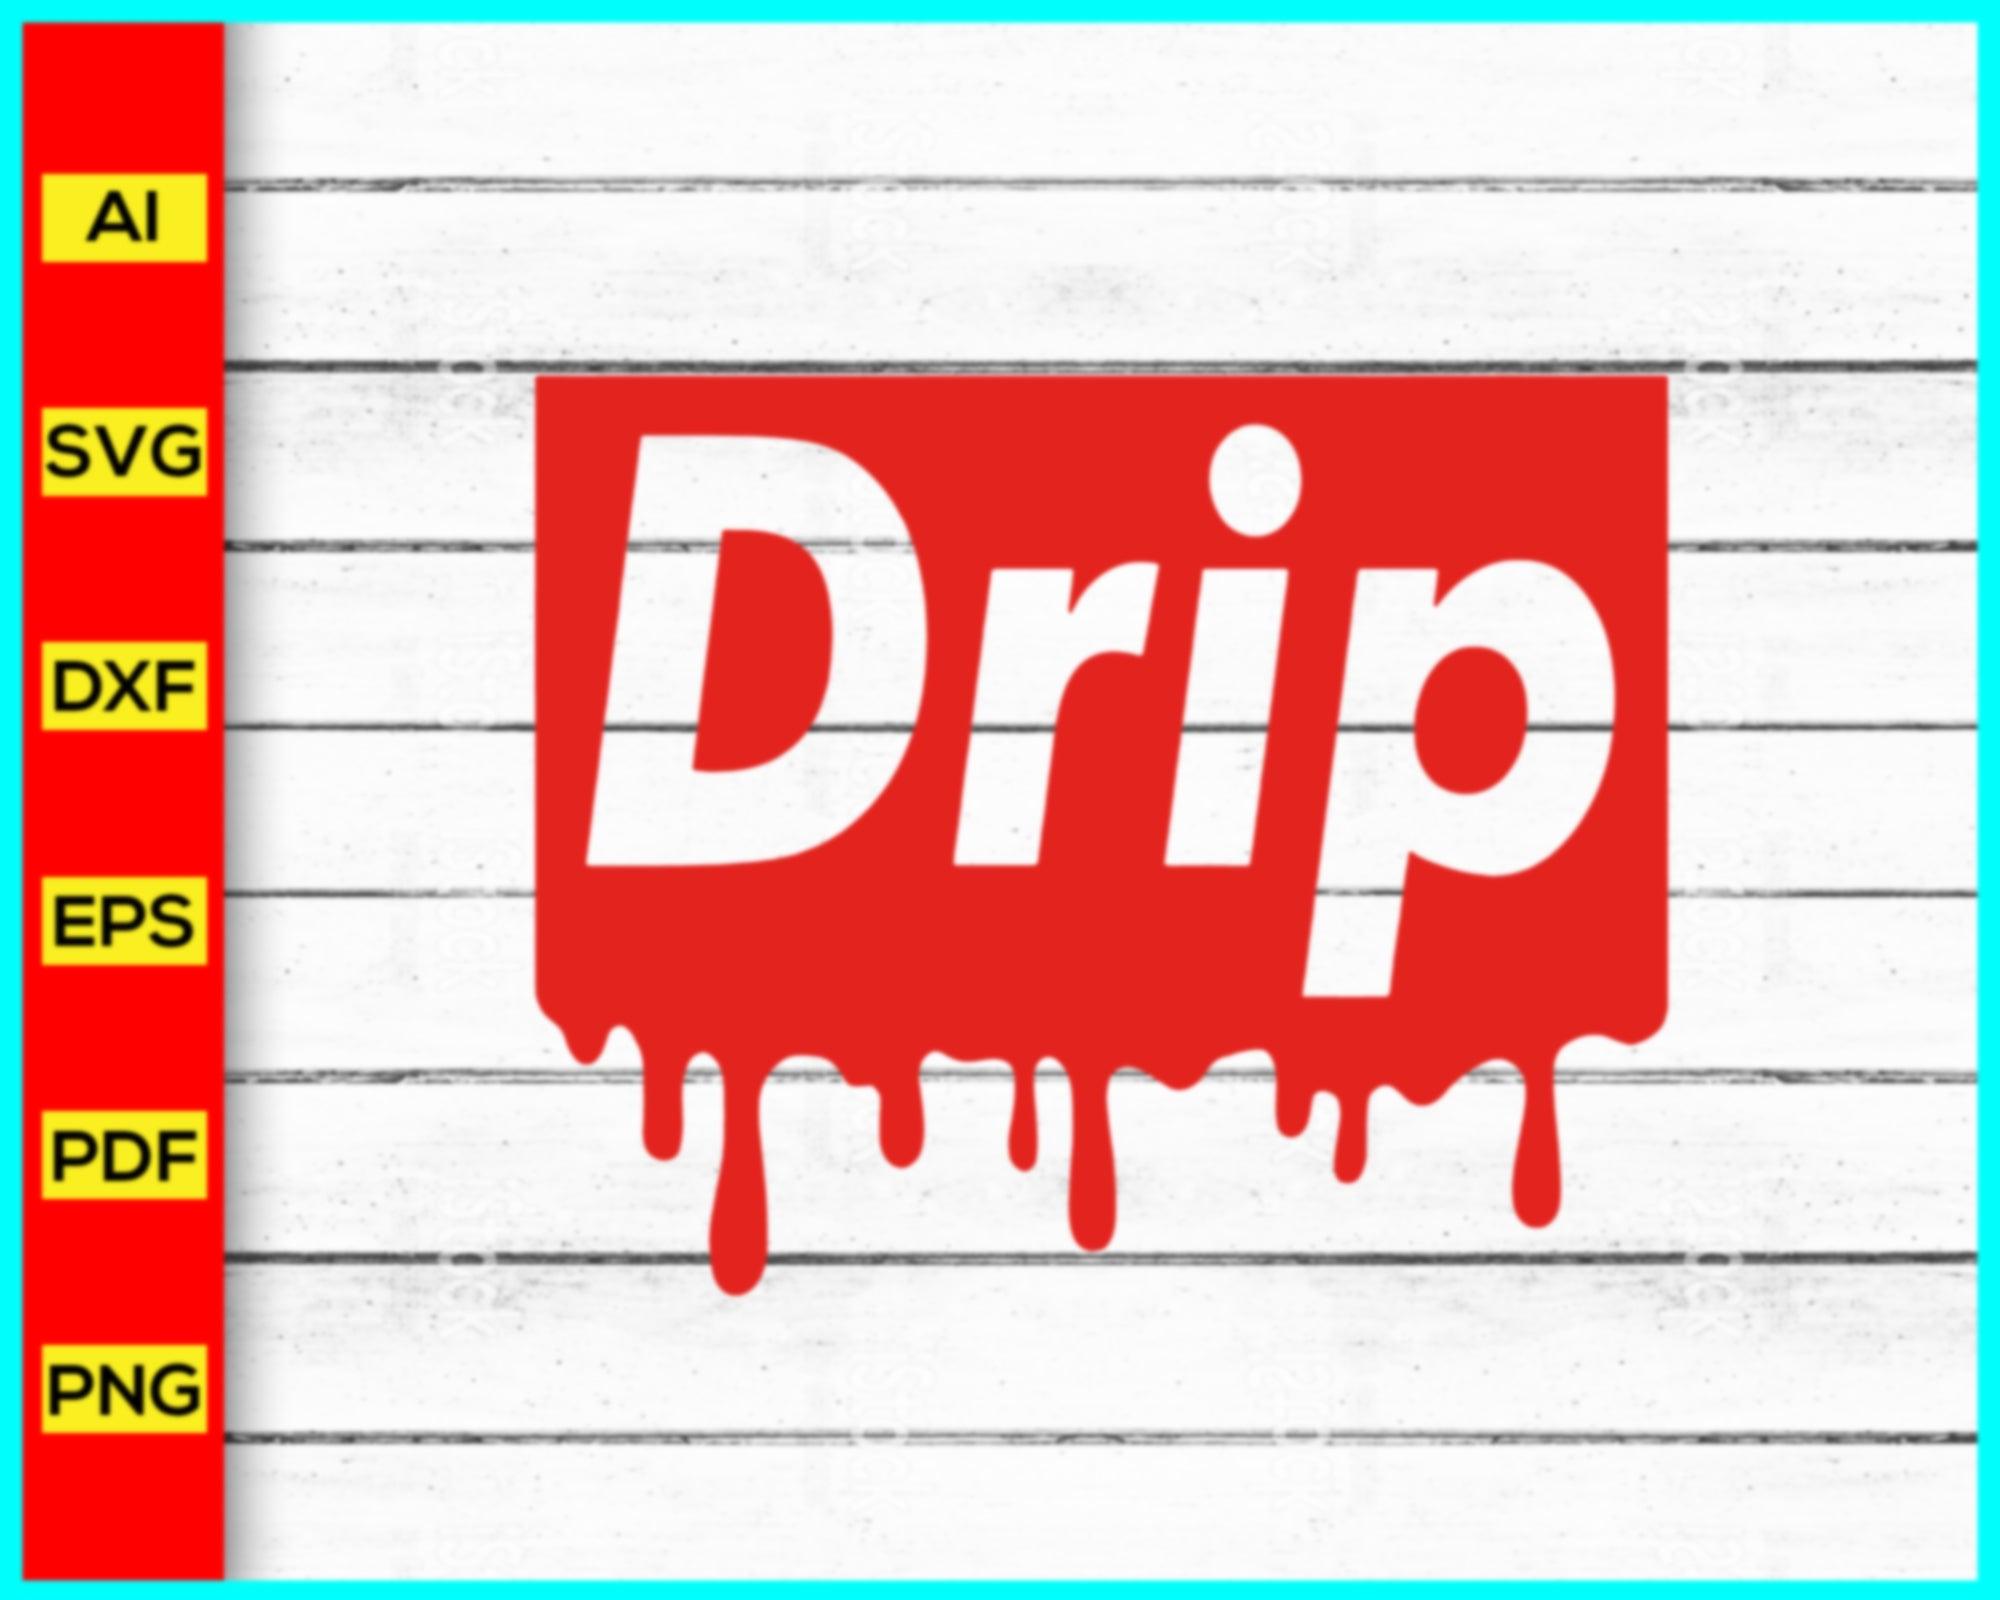 Drip LV logo SVG,EPS & PNG Files - Digital Download files for